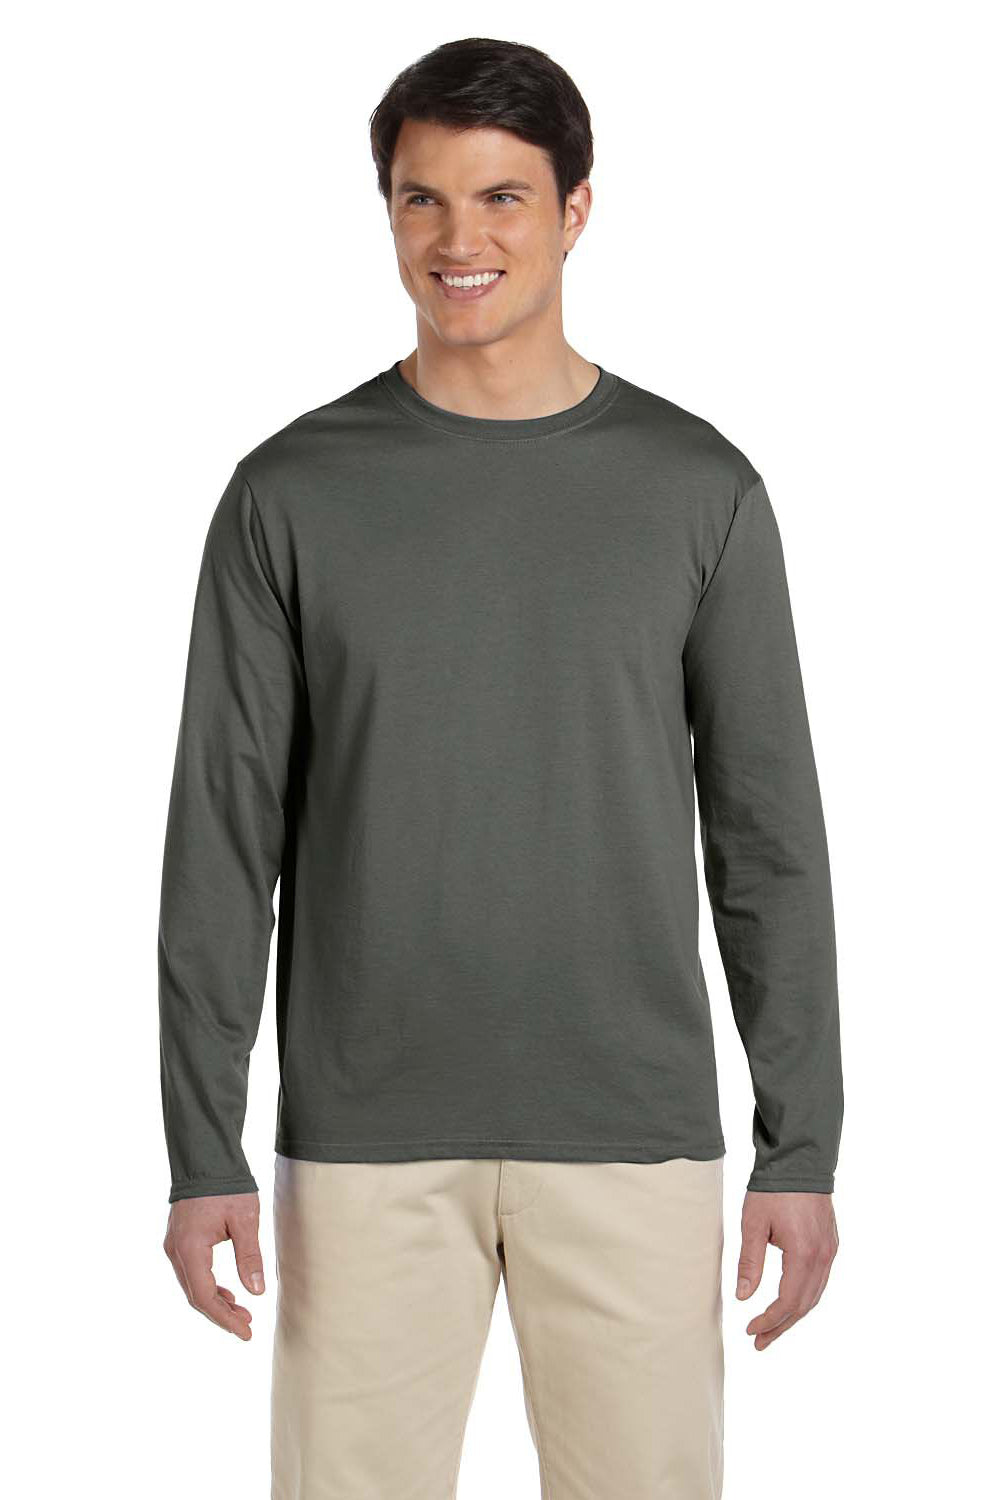 Gildan G644 Mens Softstyle Long Sleeve Crewneck T-Shirt Military Green Front